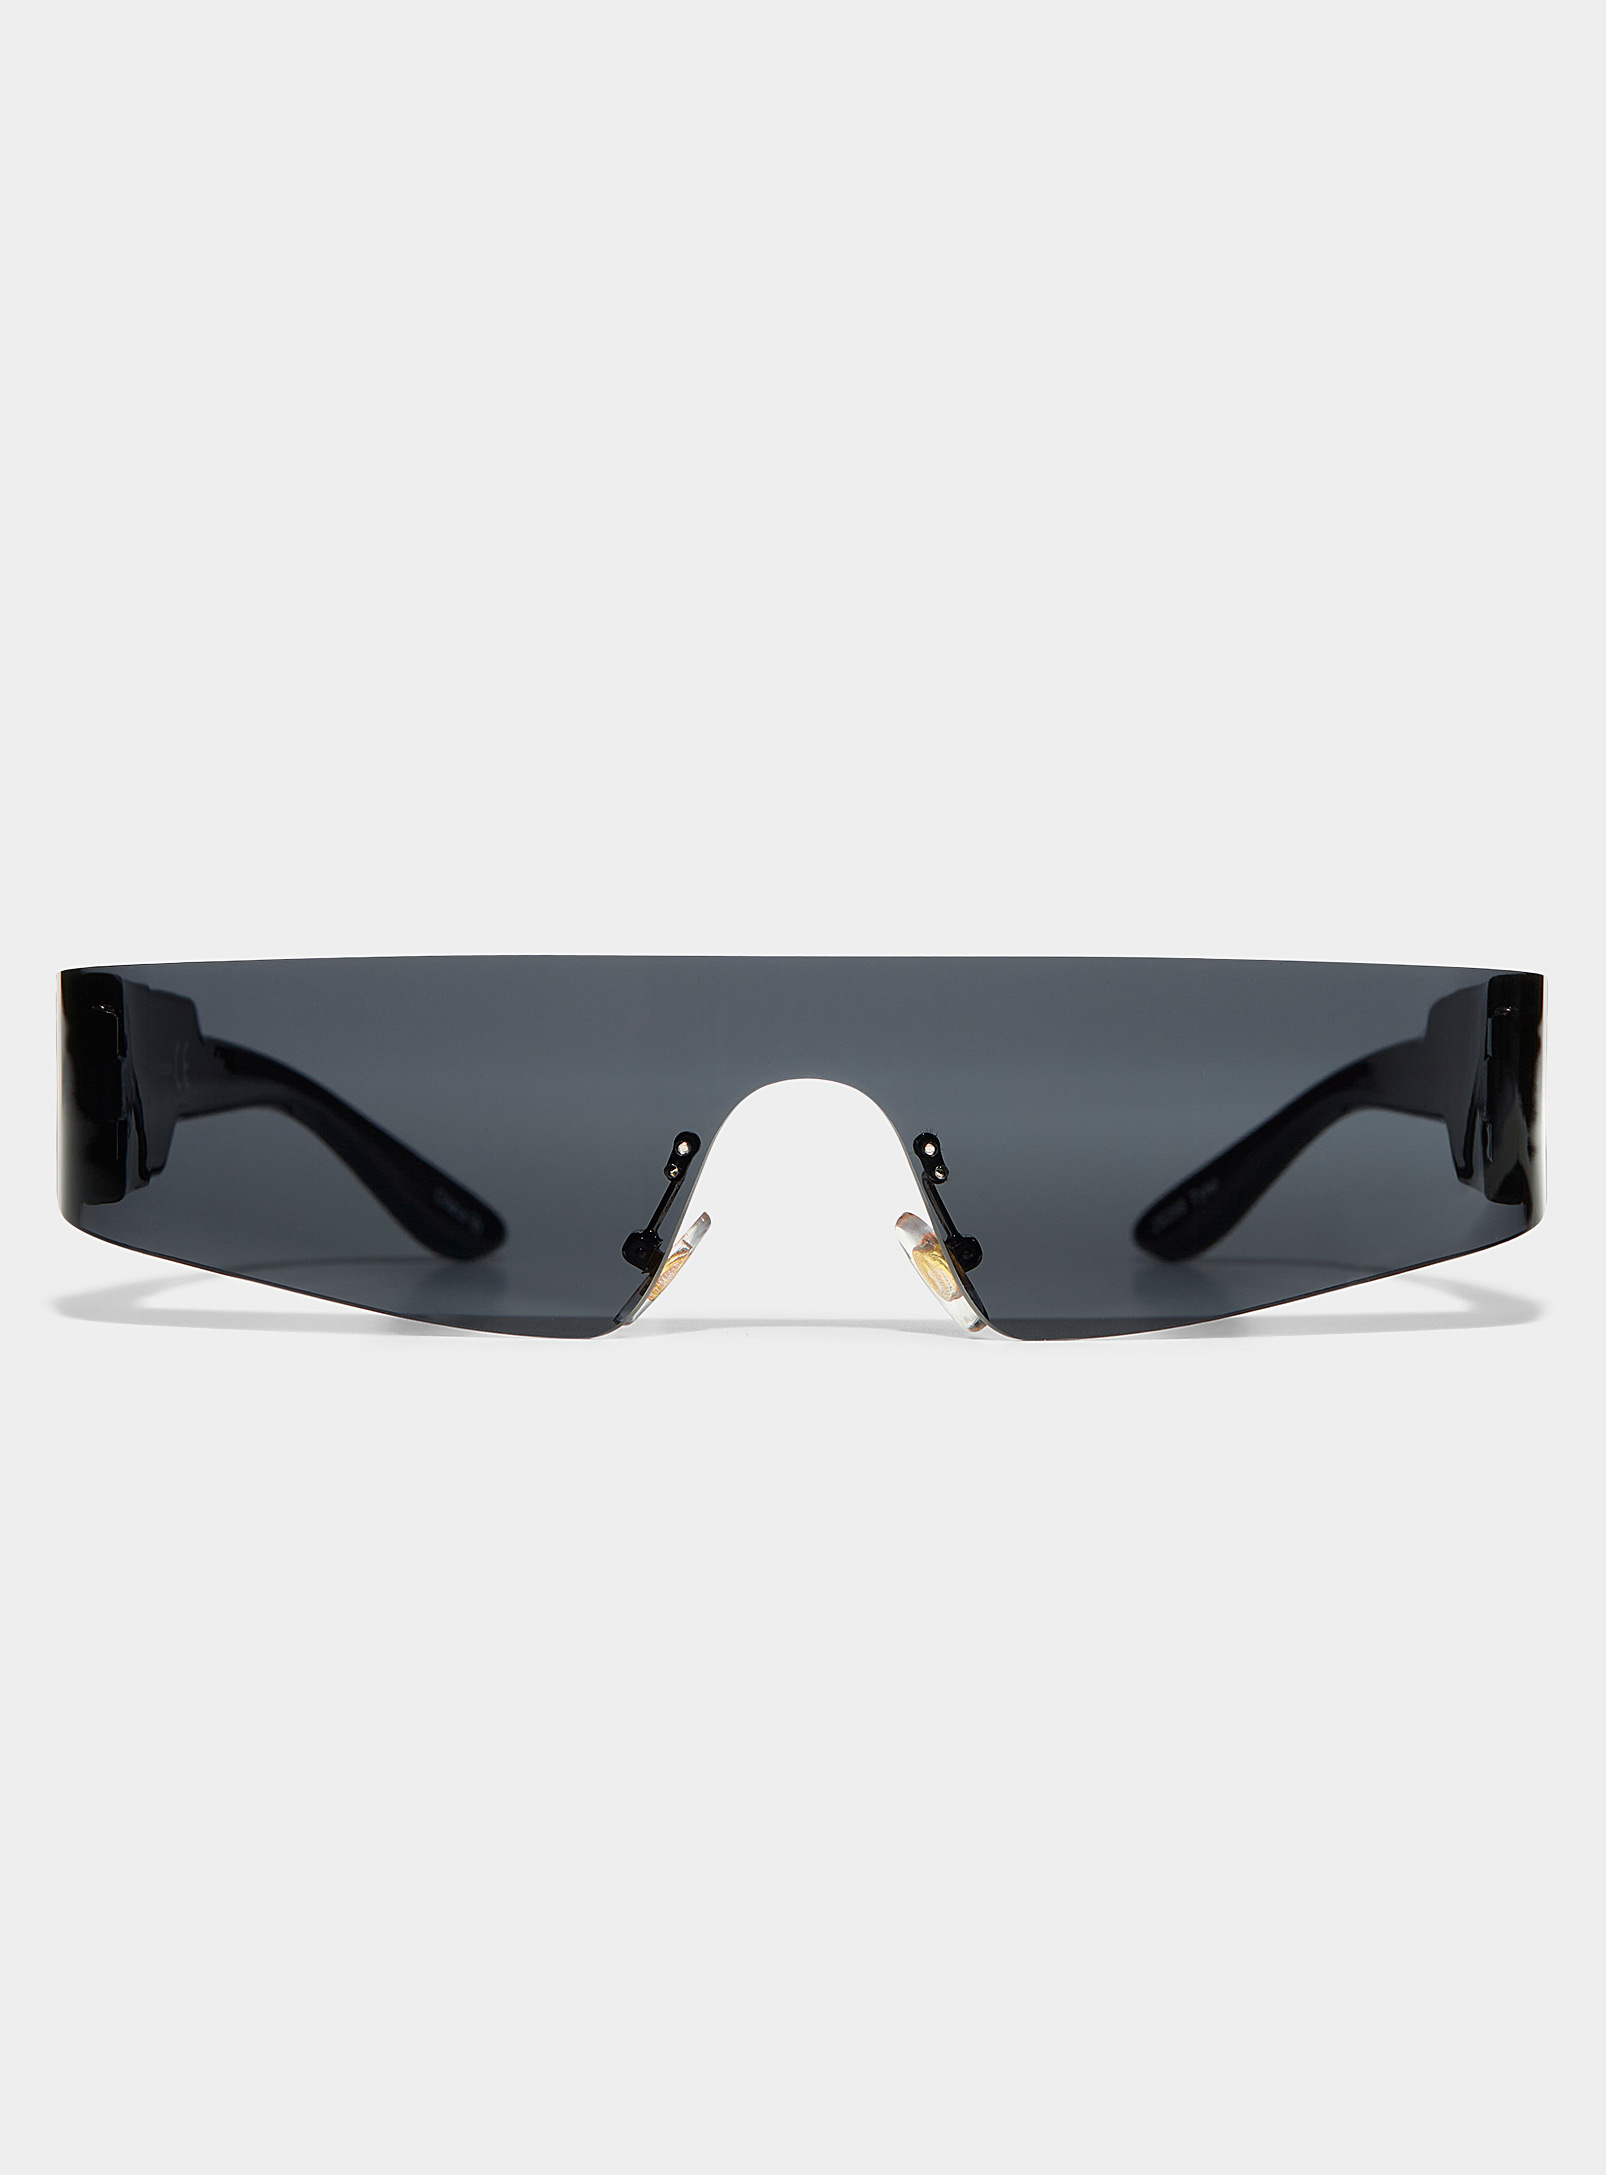 Simons - Women's Tyler futuristic sunglasses